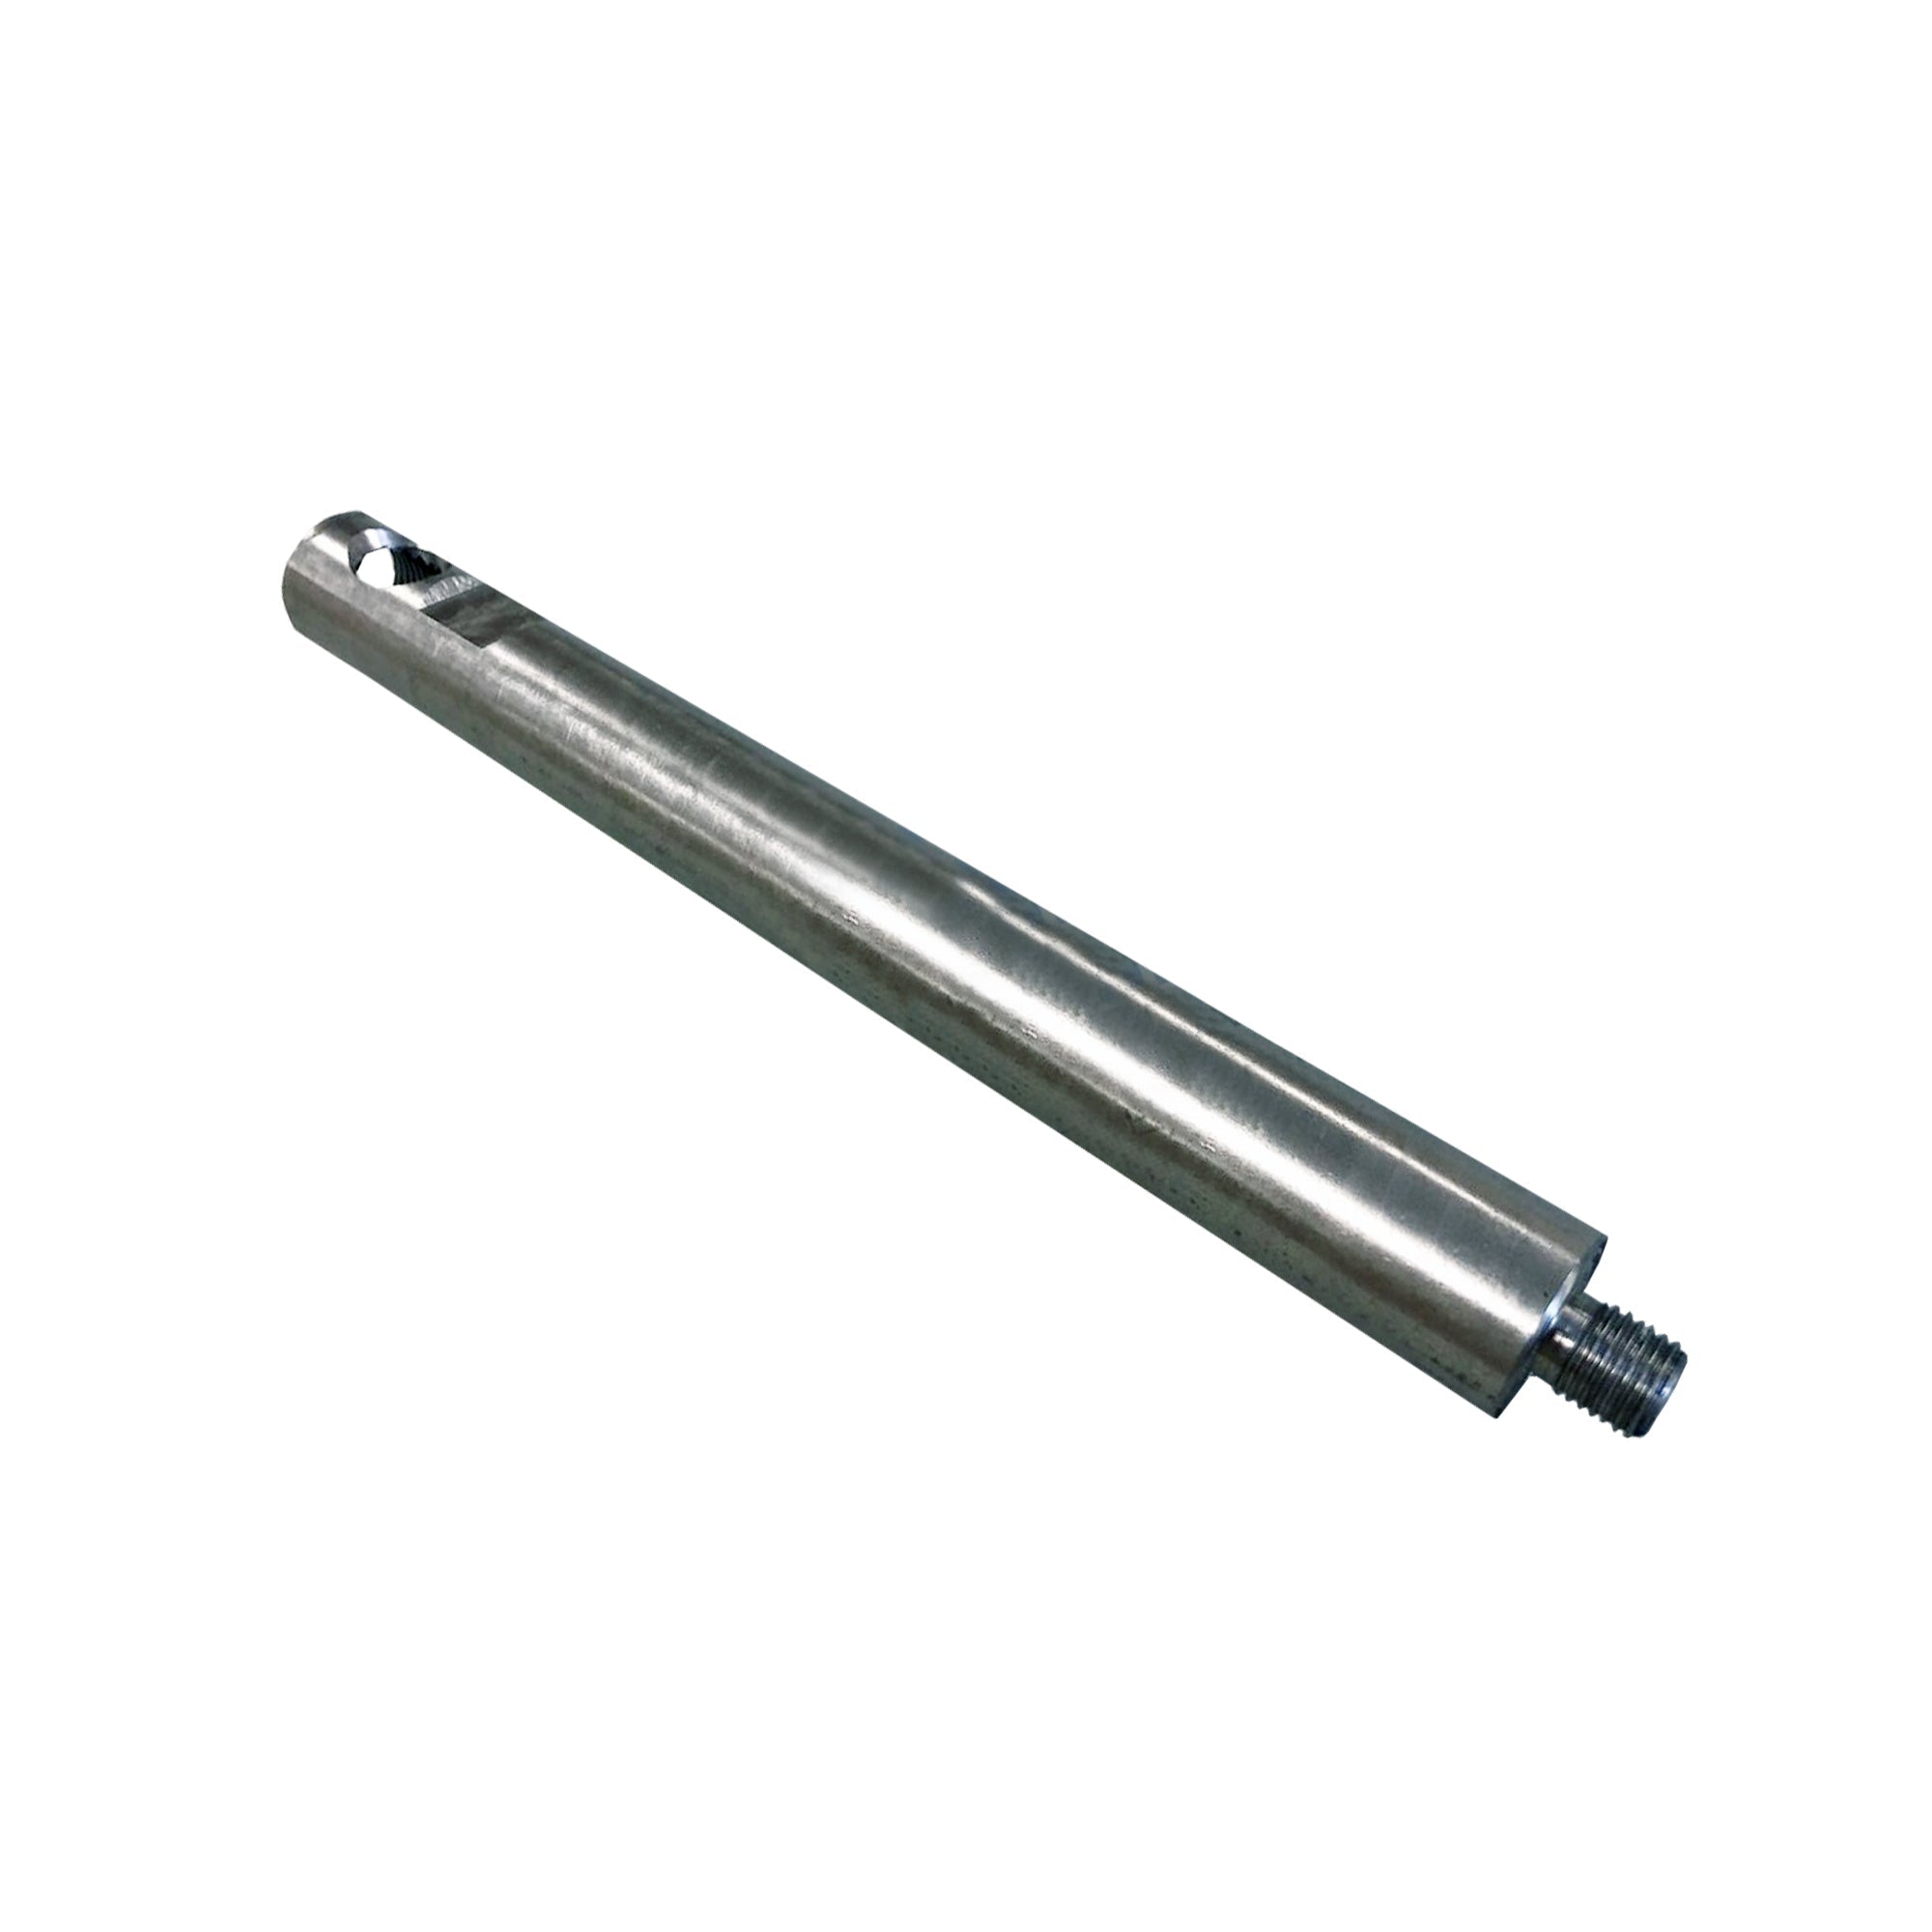 256432 - Lower Piston Rod - PURspray